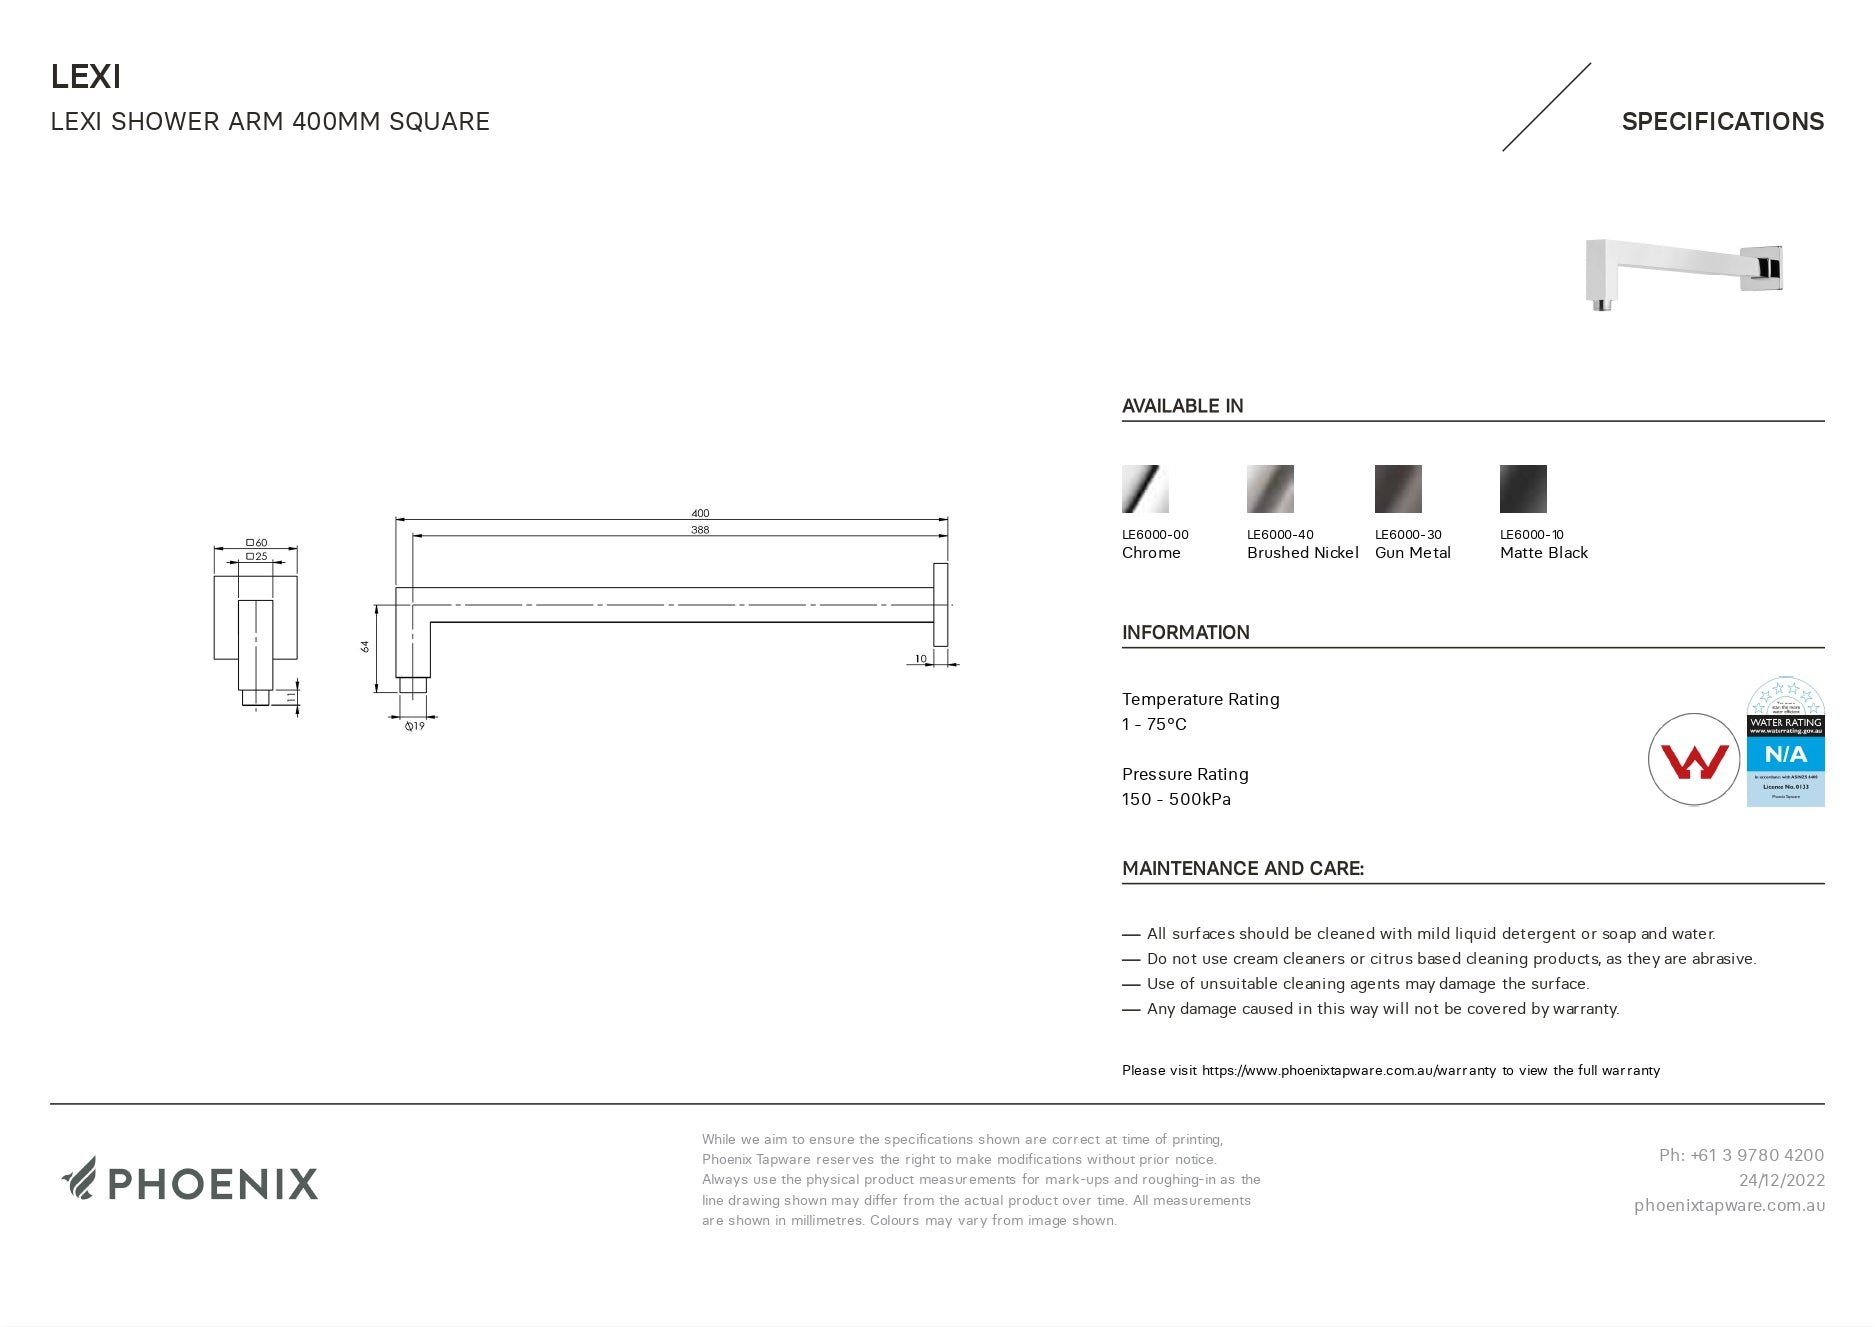 PHOENIX LEXI SHOWER ARM SQUARE GUN METAL 400MM